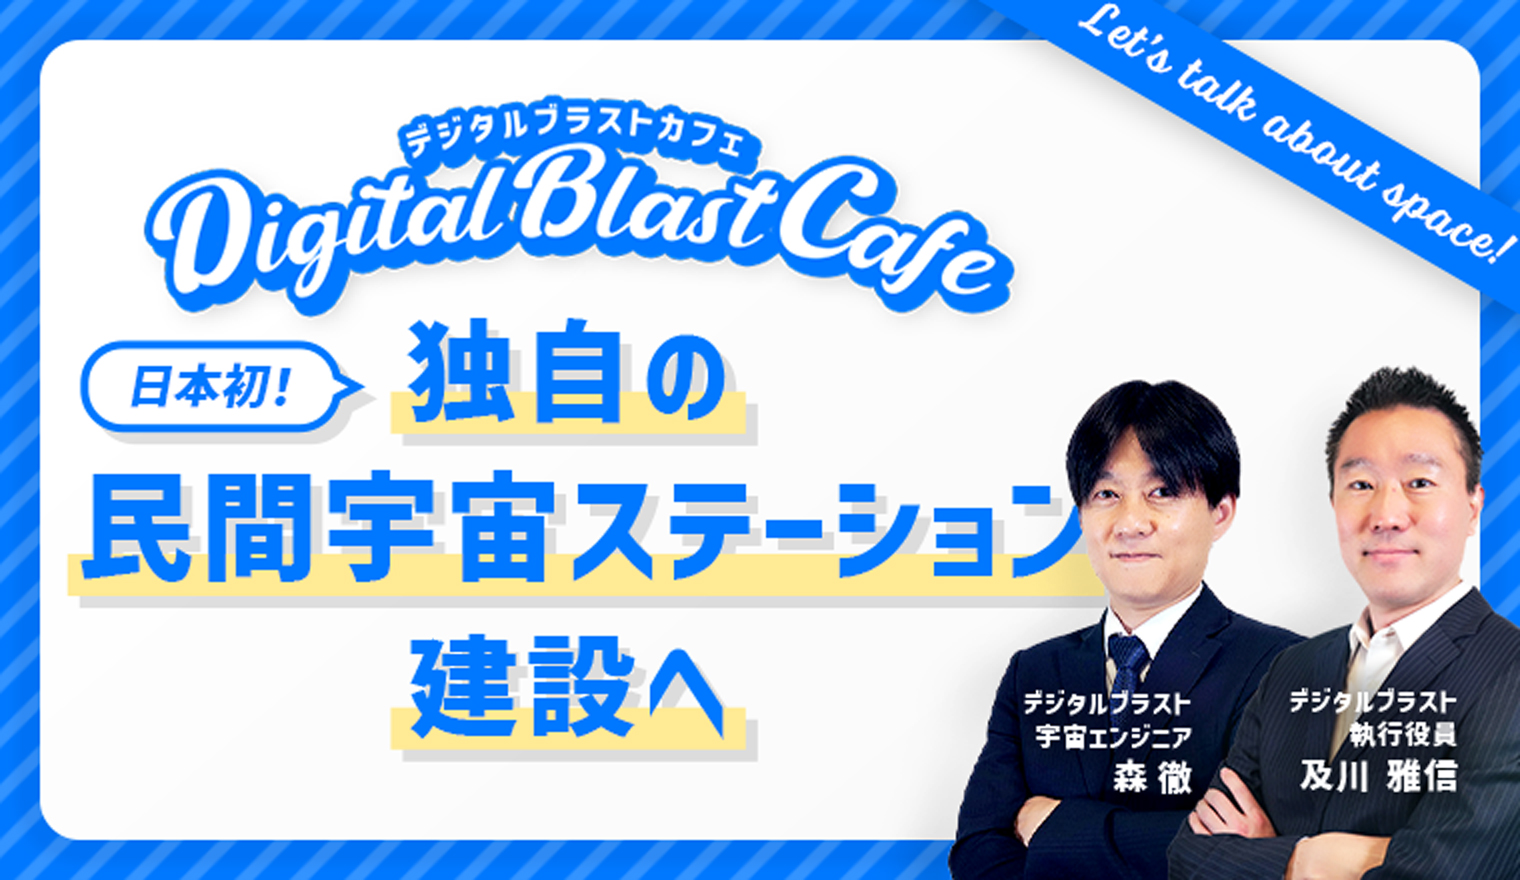 「DigitalBlast Cafe～日本初！独自の民間宇宙ステーション建設へ～」開催のお知らせ